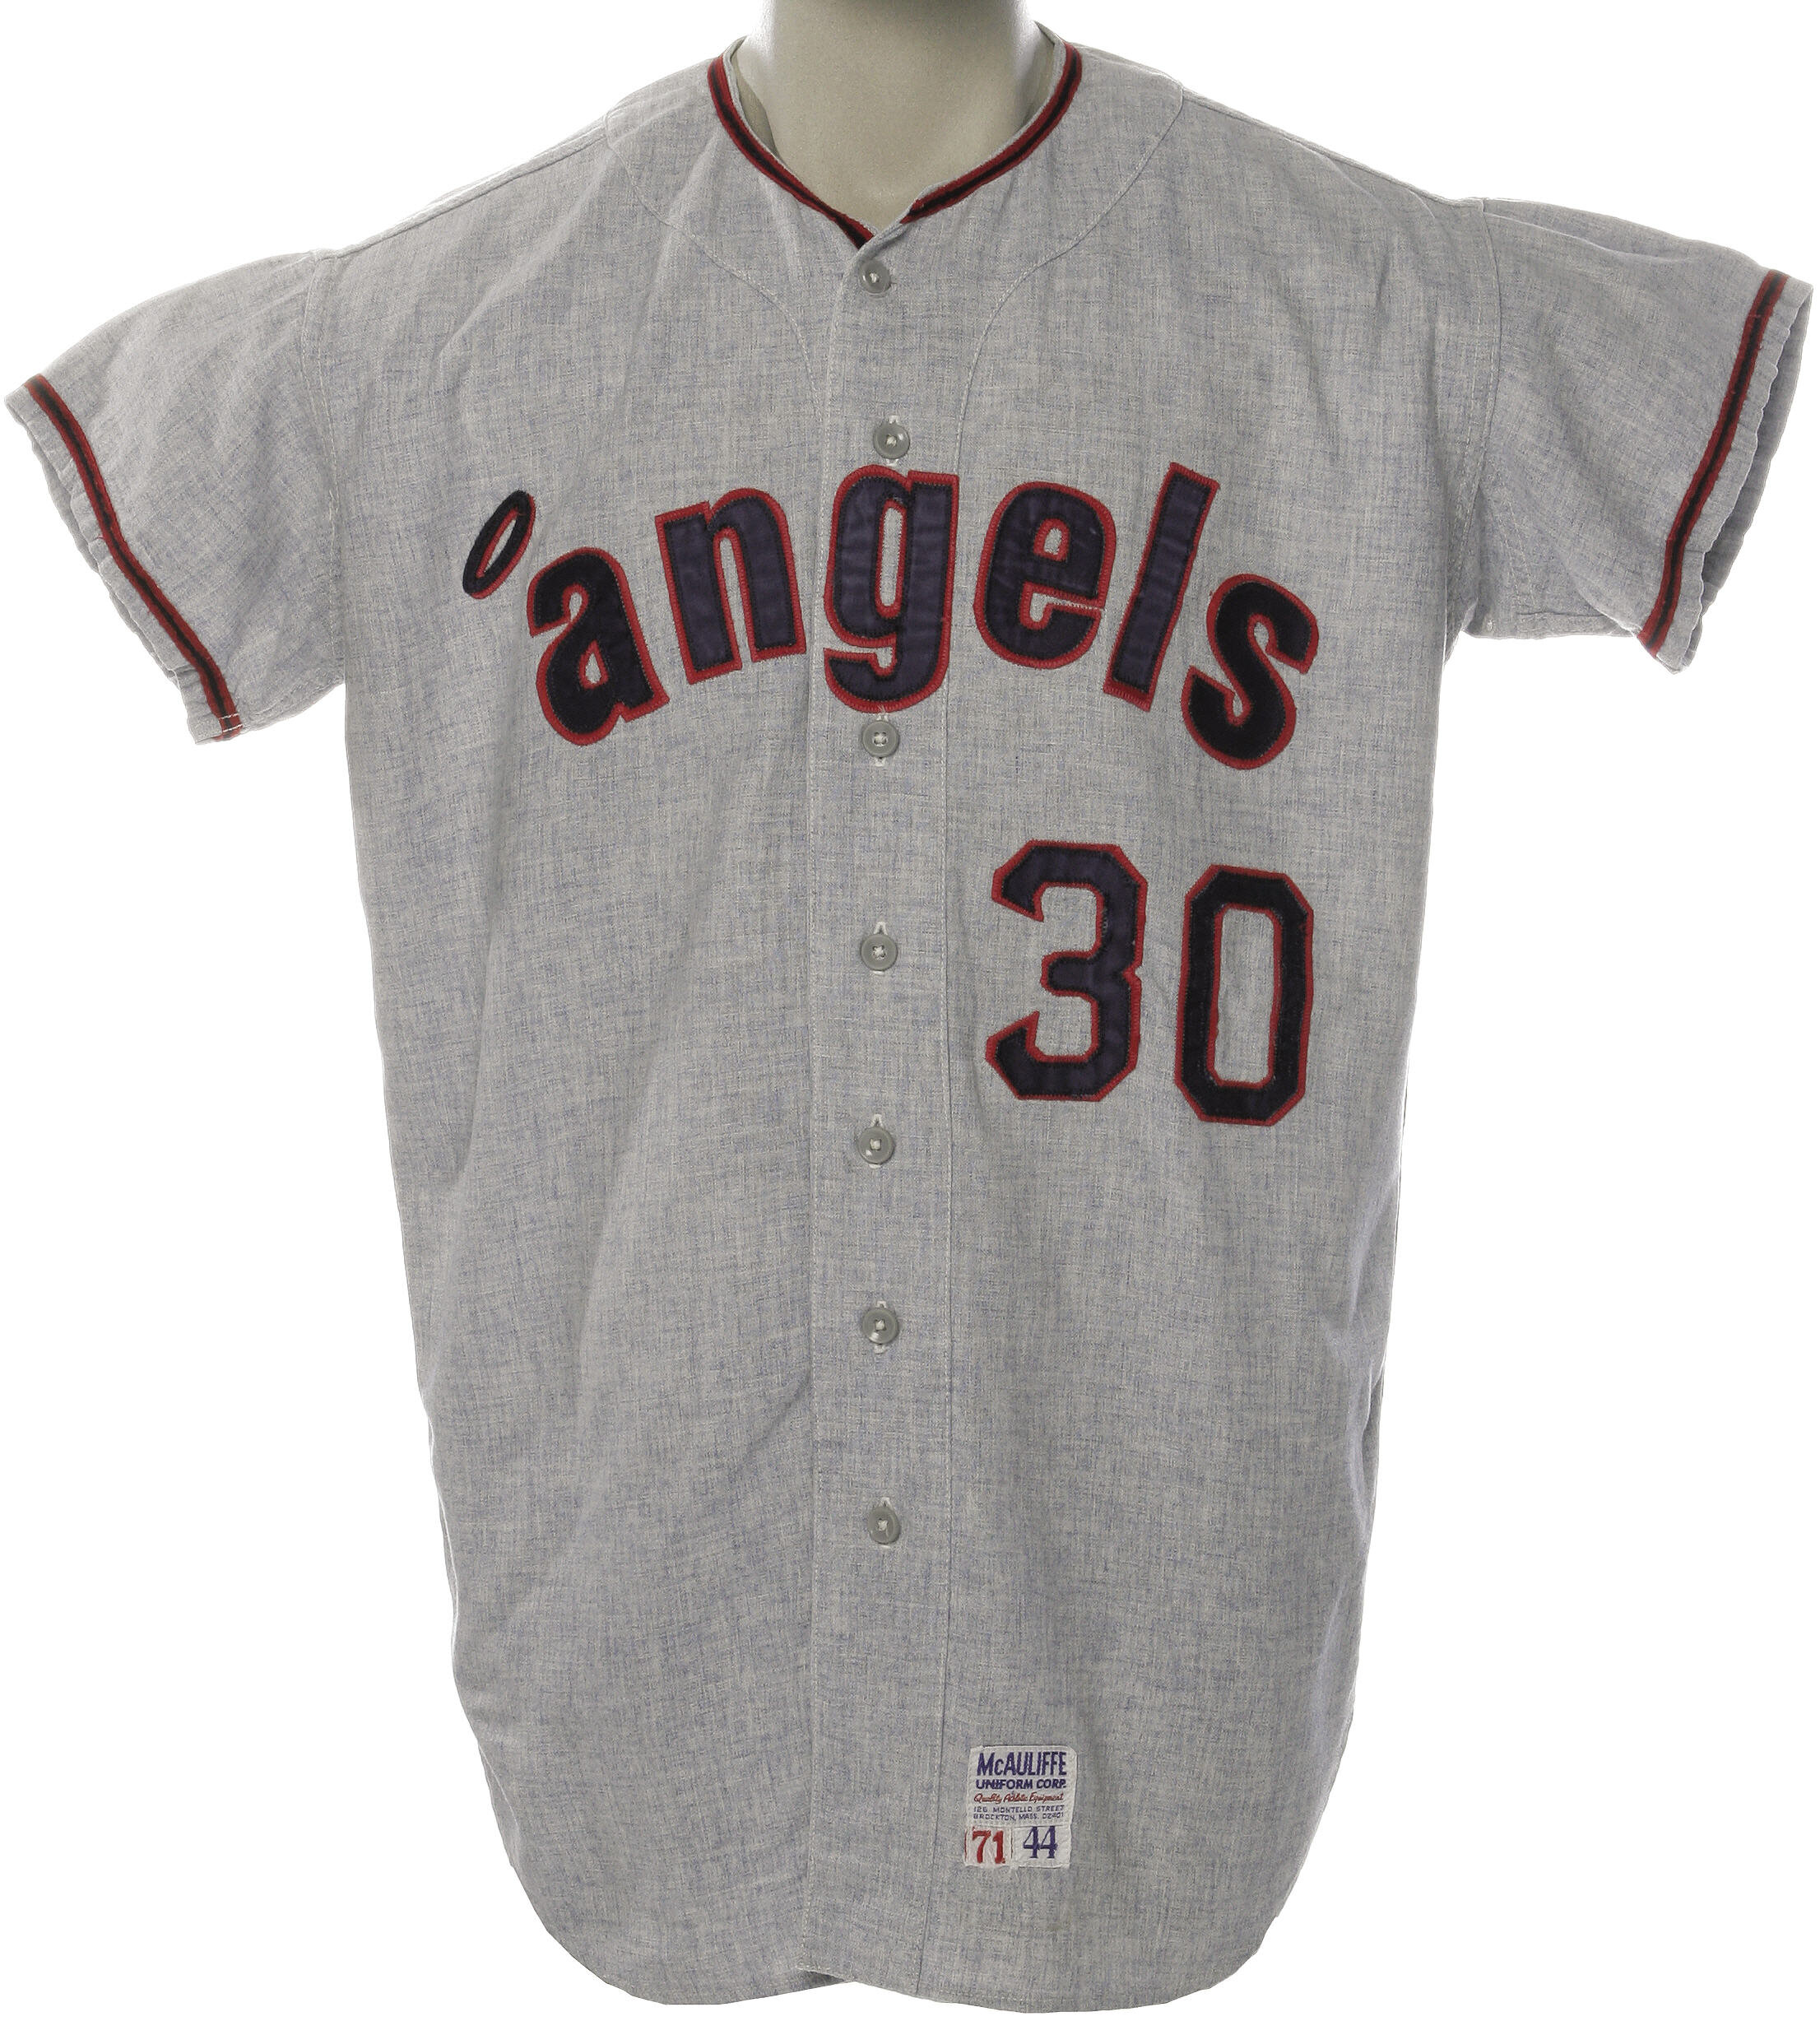 1971 California Angels Game Worn Jersey Attributed to Nolan Ryan., Lot  #19435